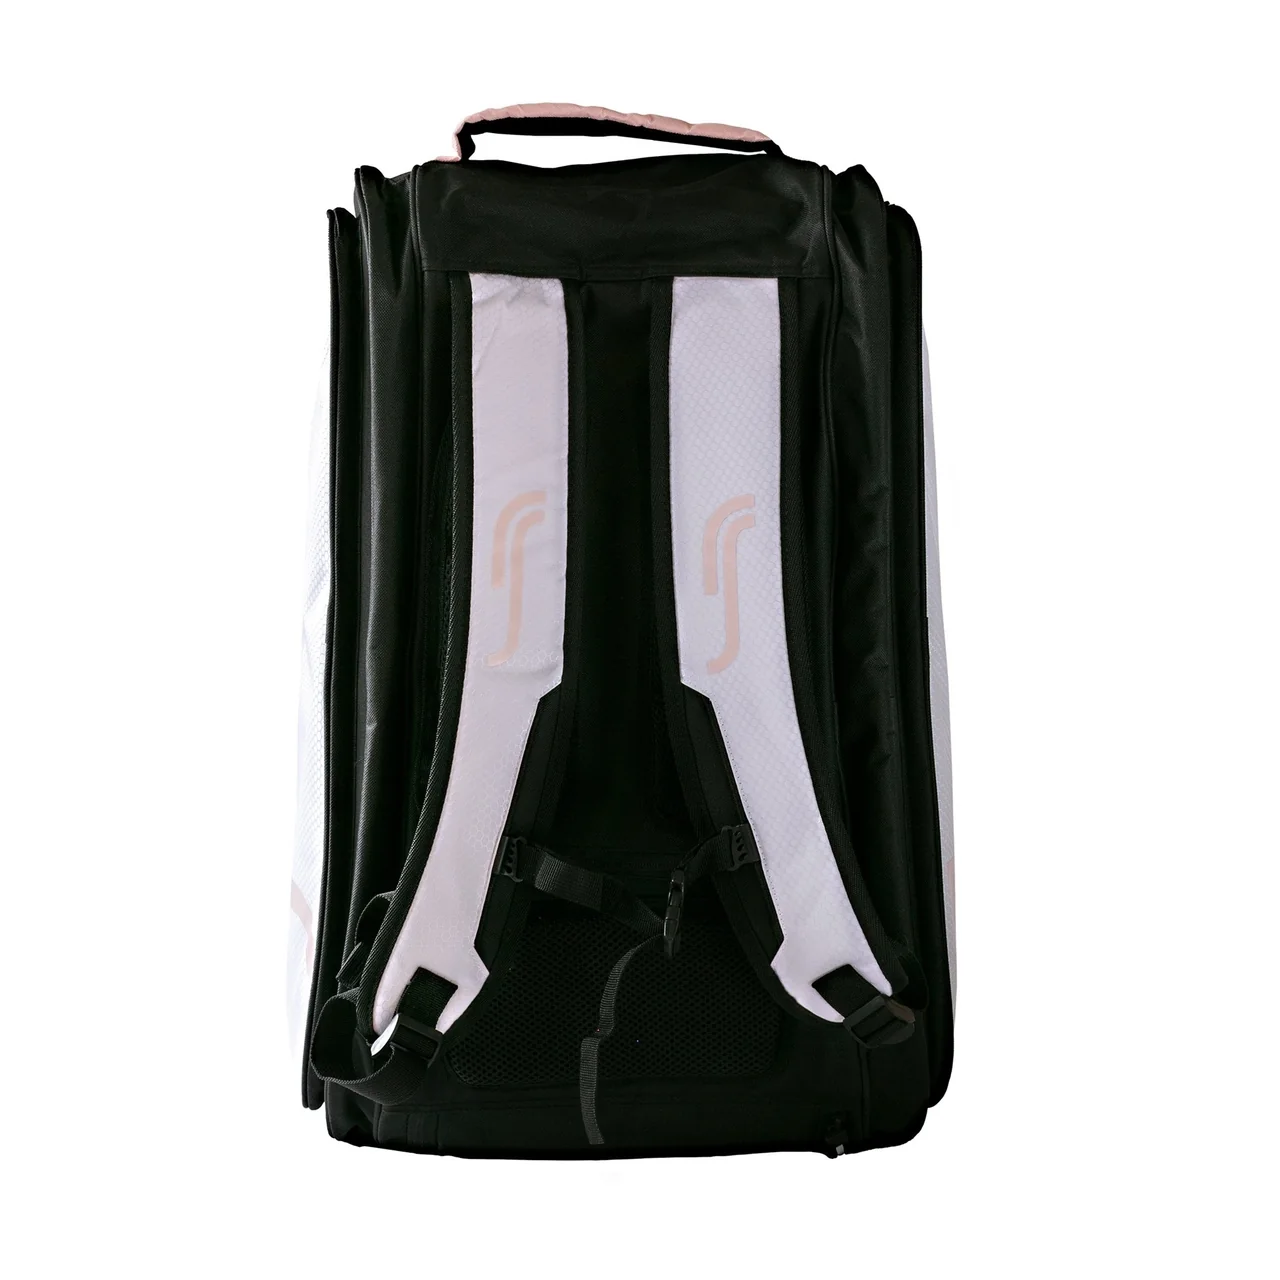 RS Classic Padel Bag White/Black/Pink